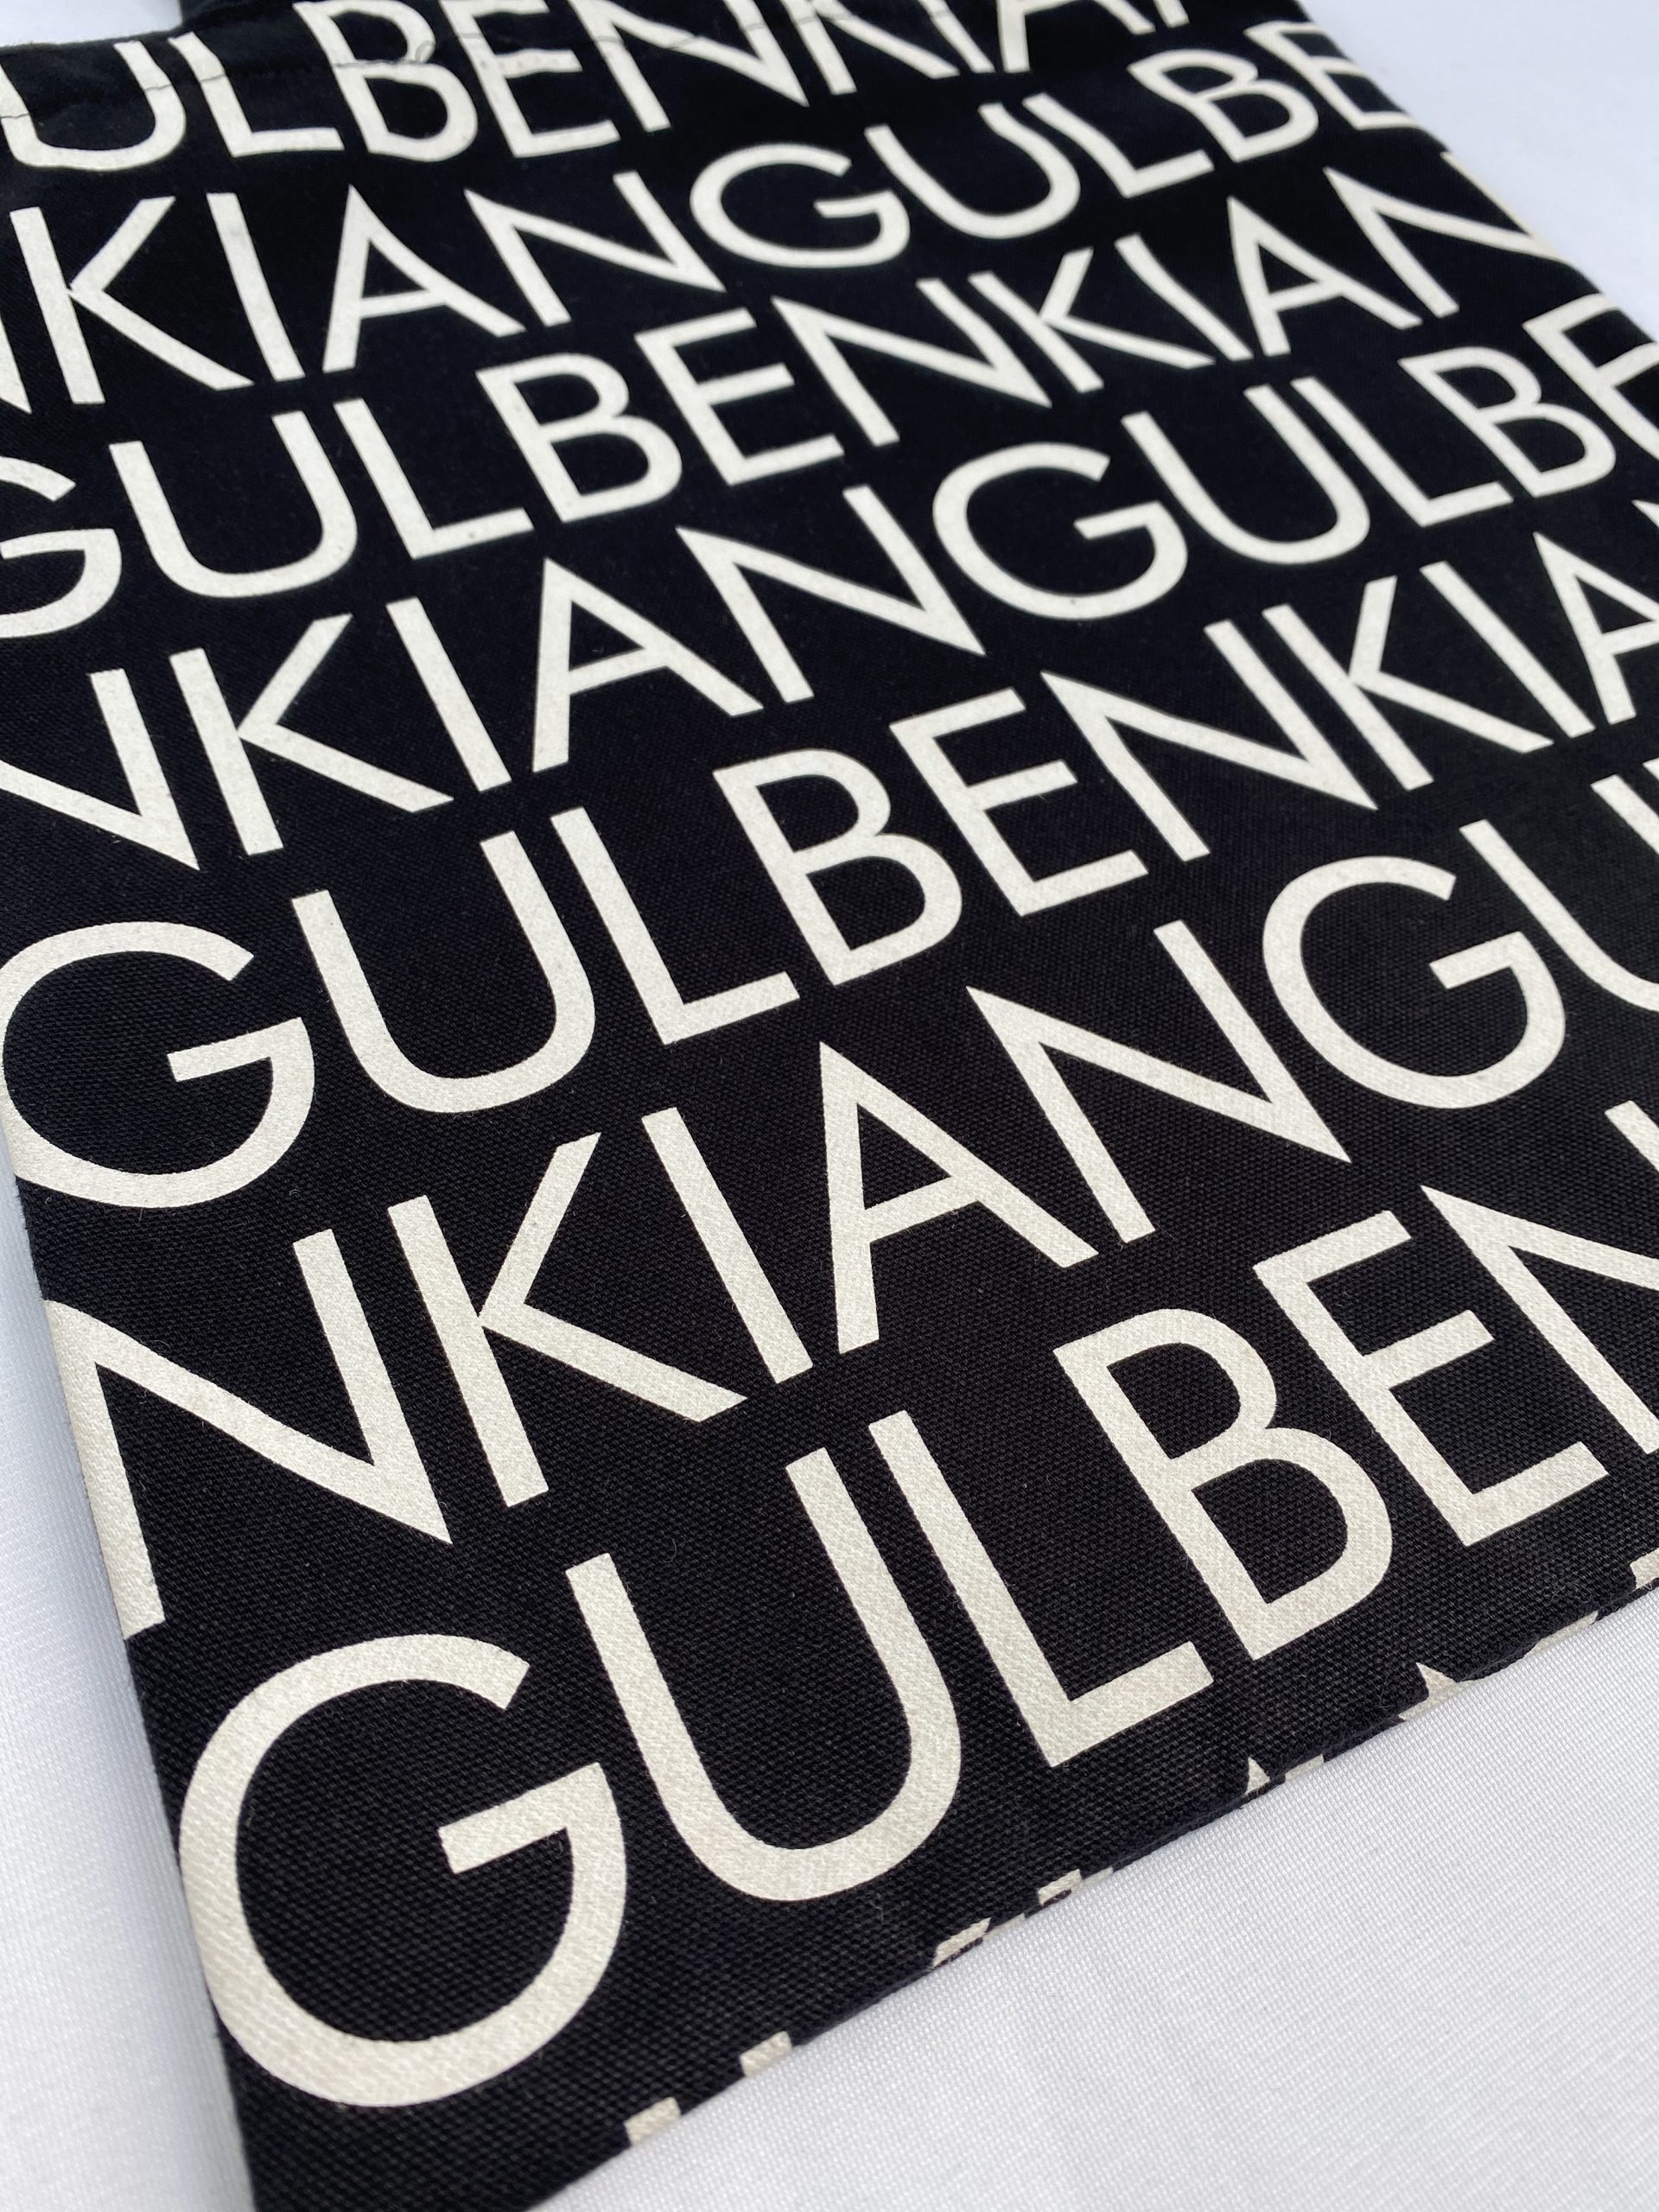 Gulbenkian Foundation printed tote bag